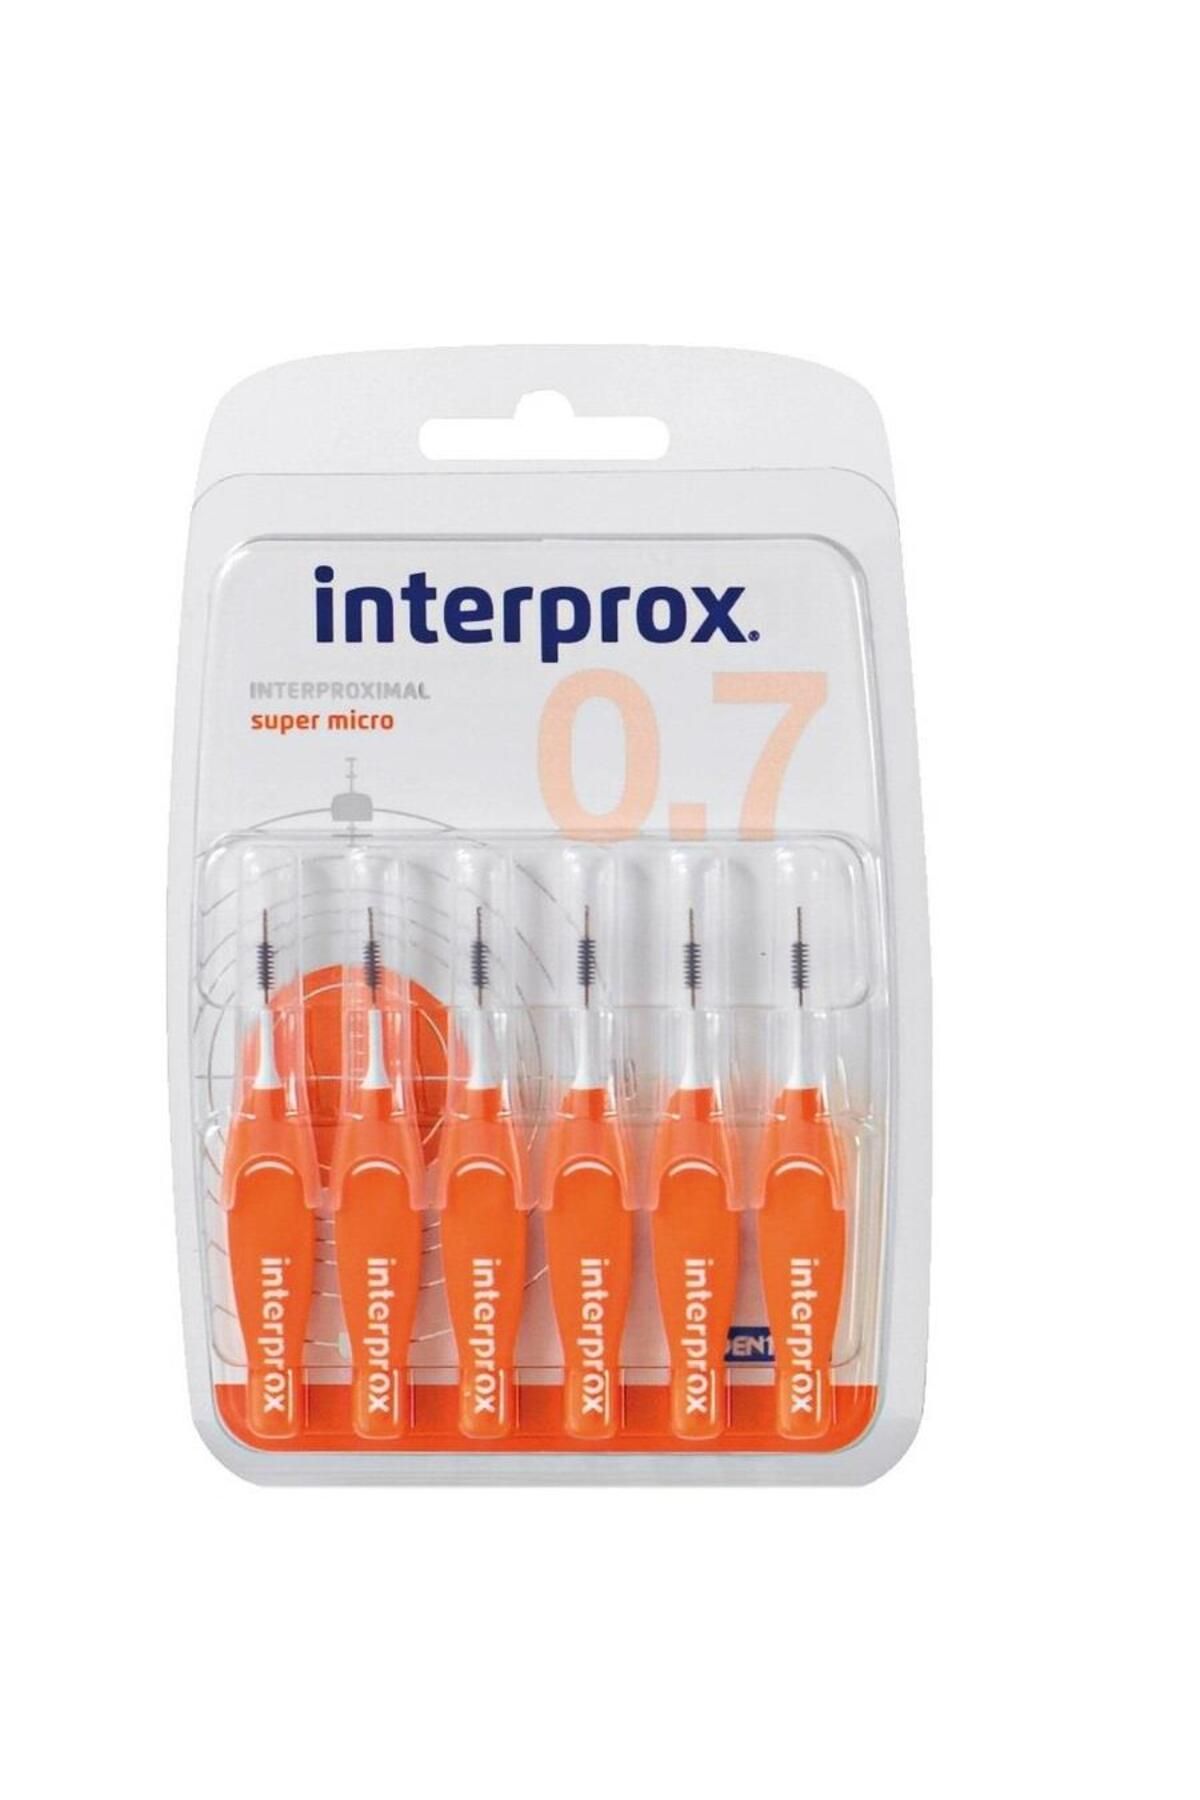 İnterprox Interprox Interproximal Süper Micro 0.7mm Arayüz Fırçası 6 Adet Turuncu